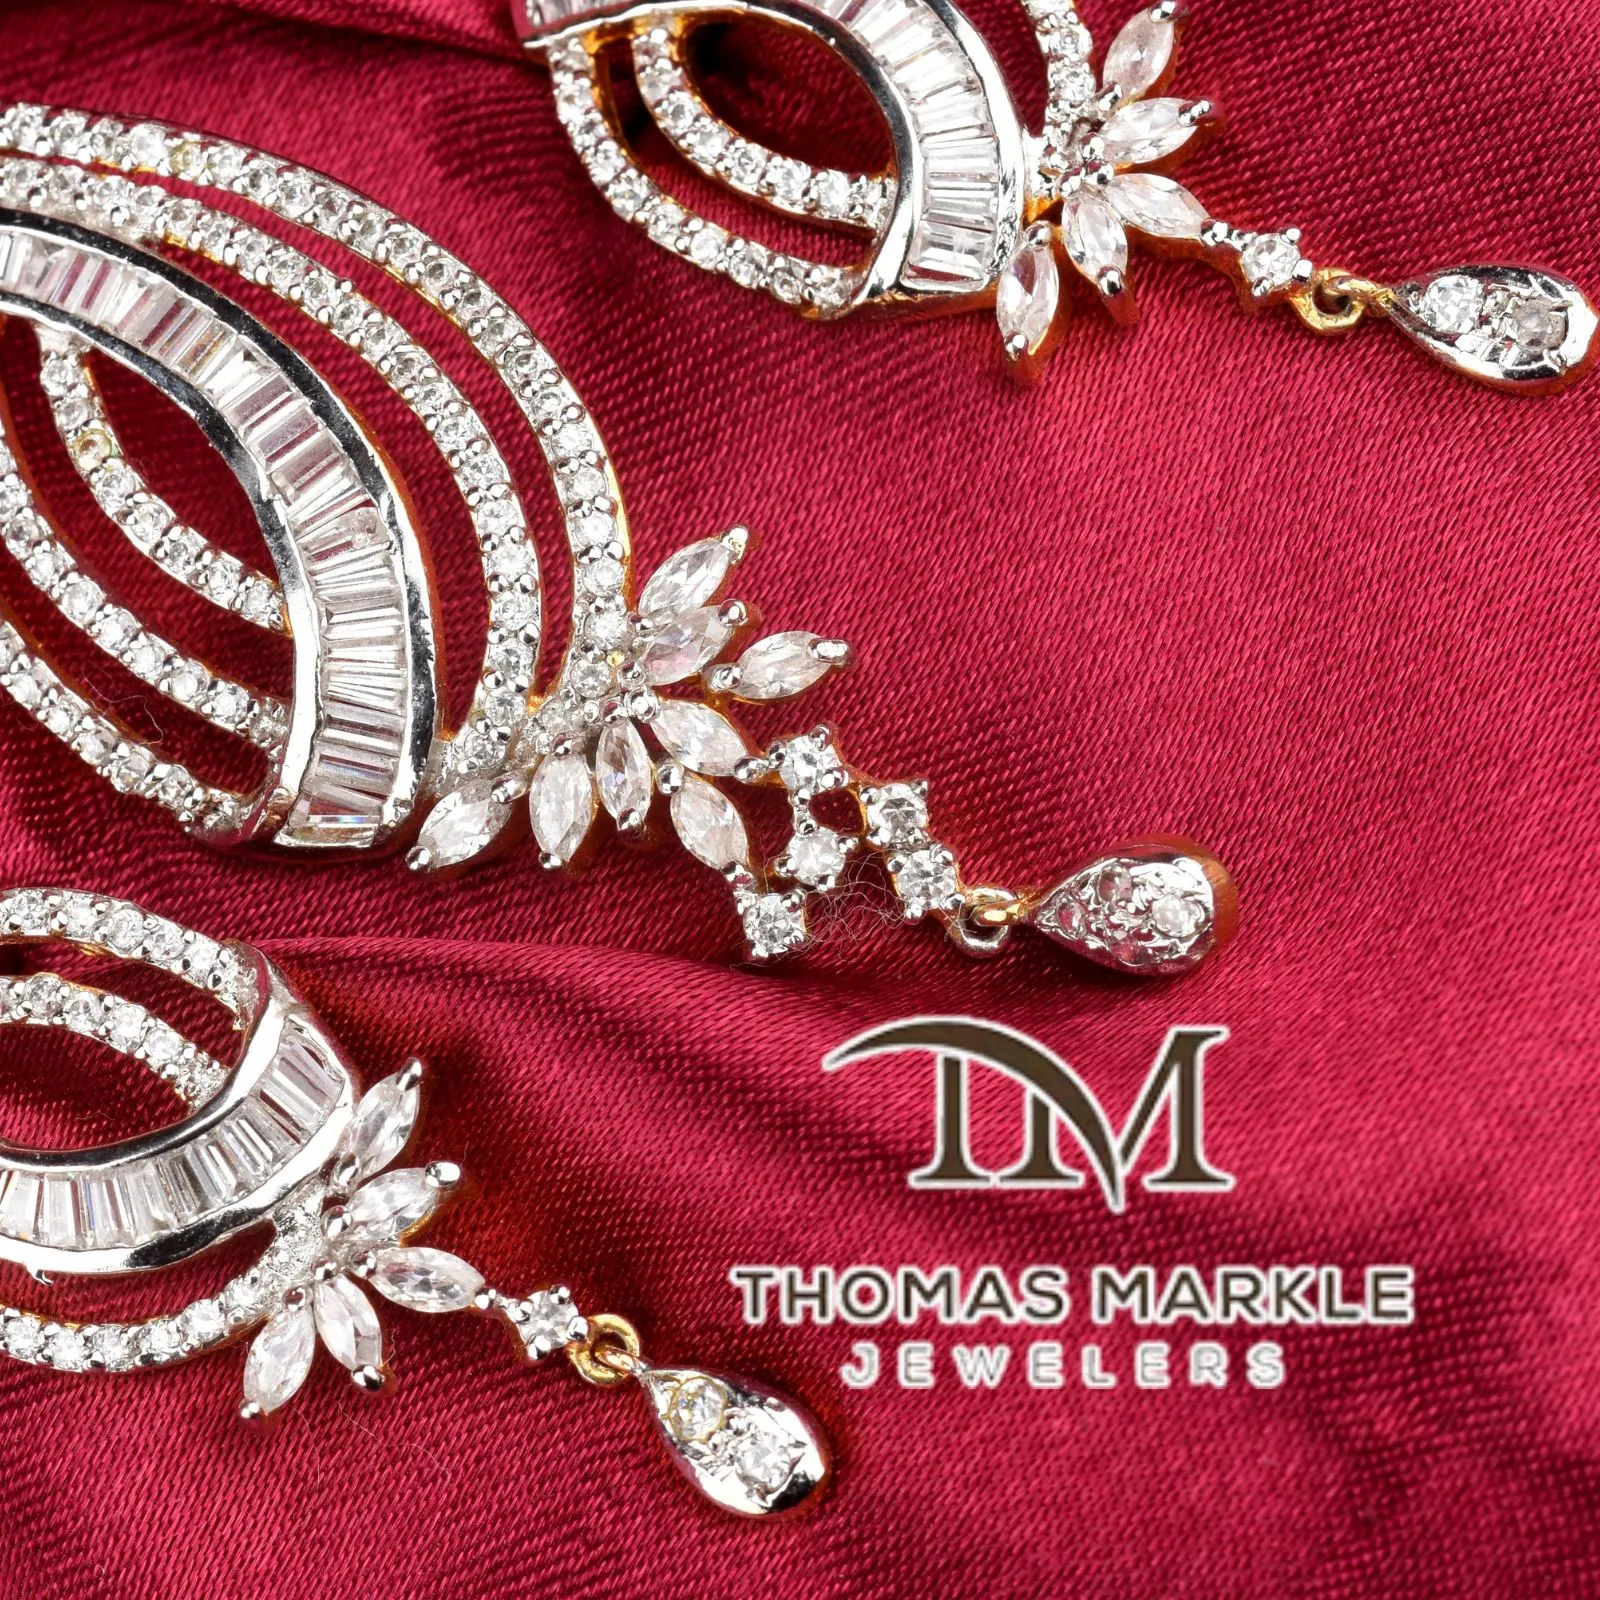 Thomas-Markle-Jewelers_Mobile_ET